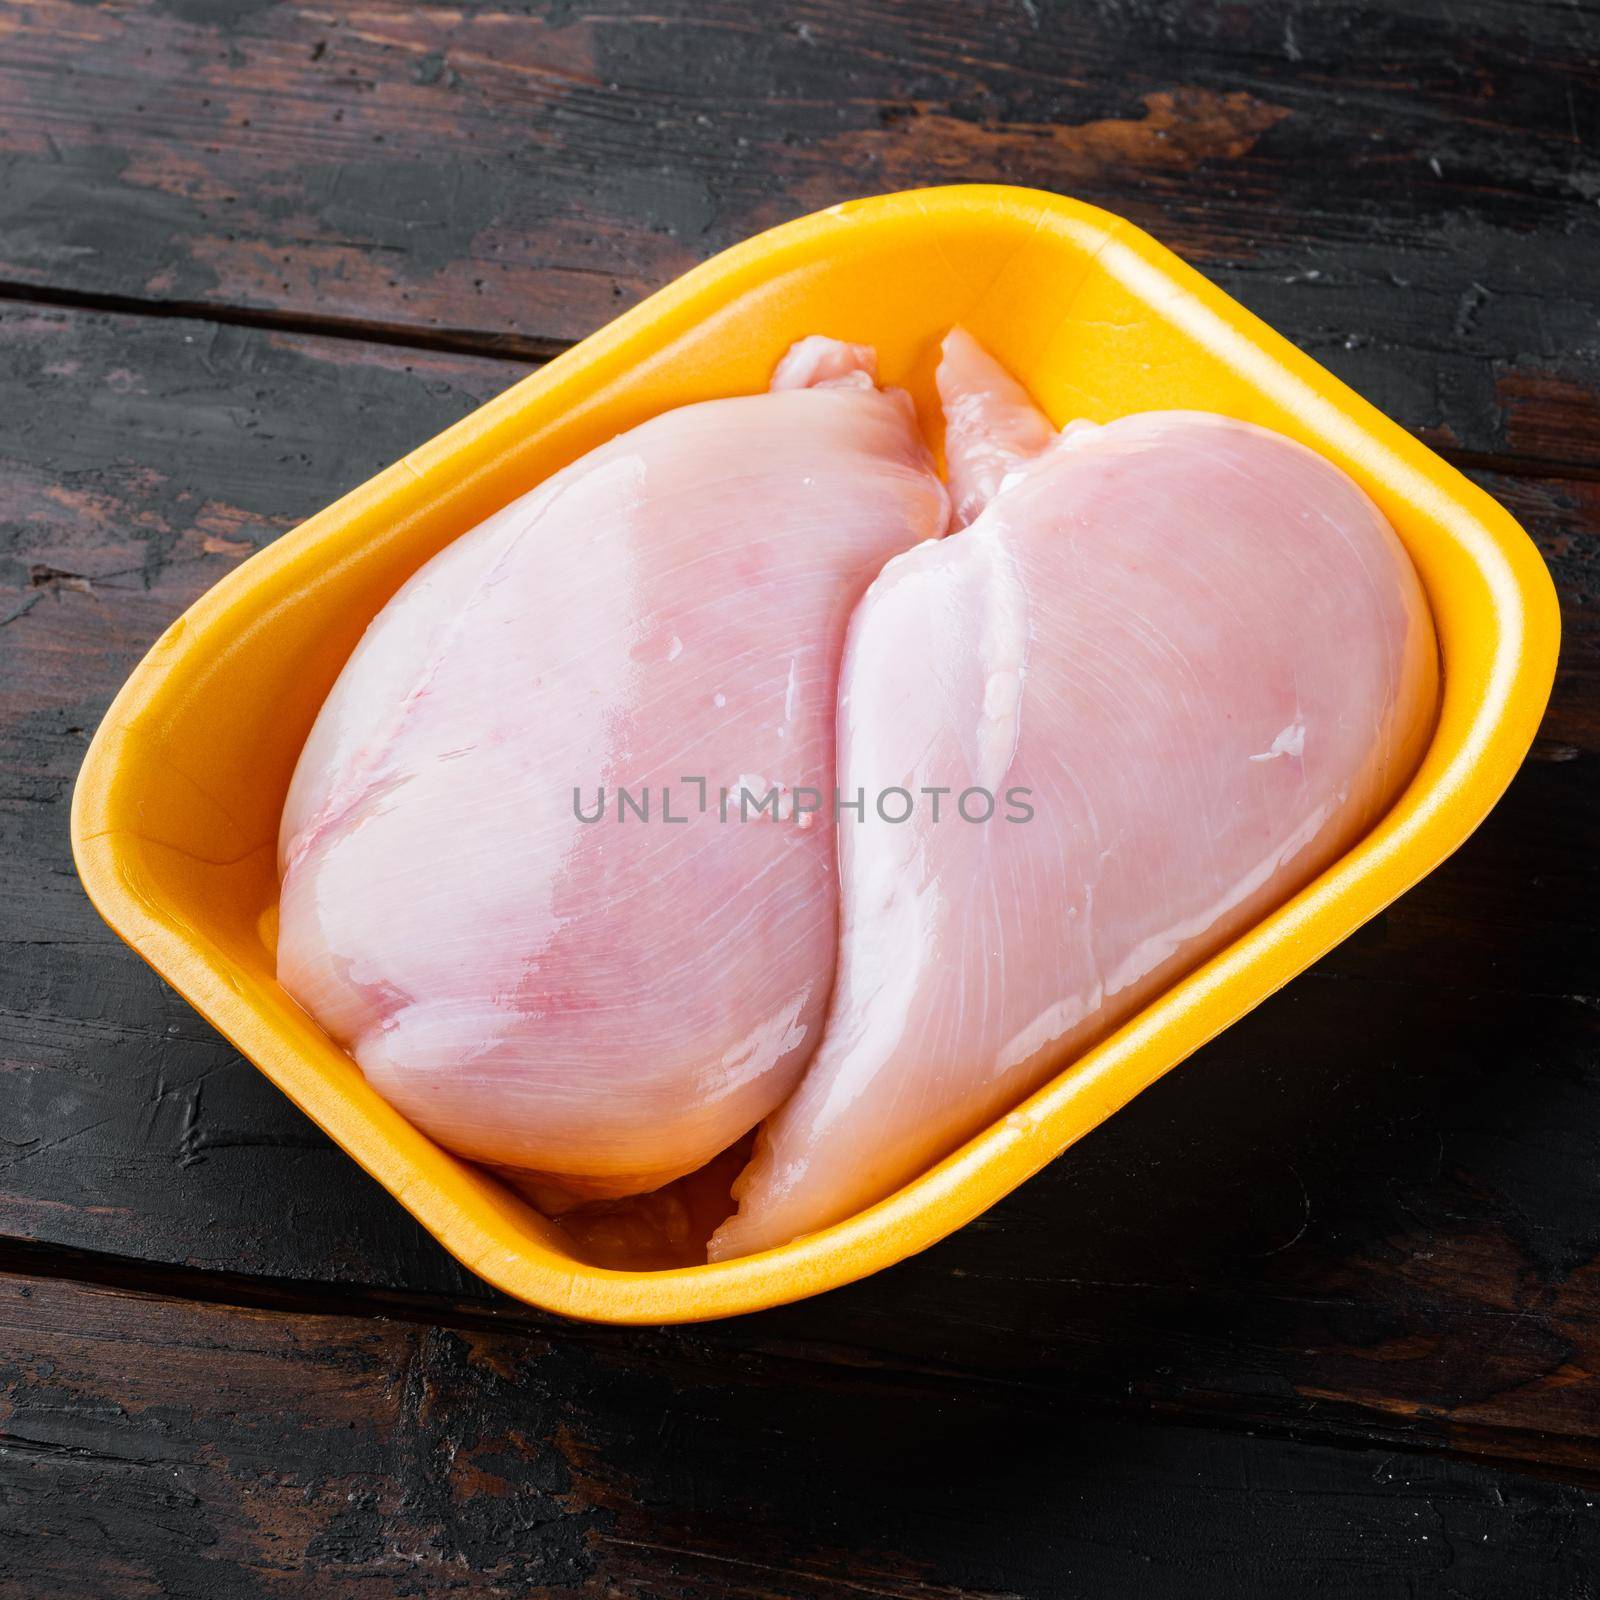 Raw chicken breast fillet in tray, on dark wooden background by Ilianesolenyi